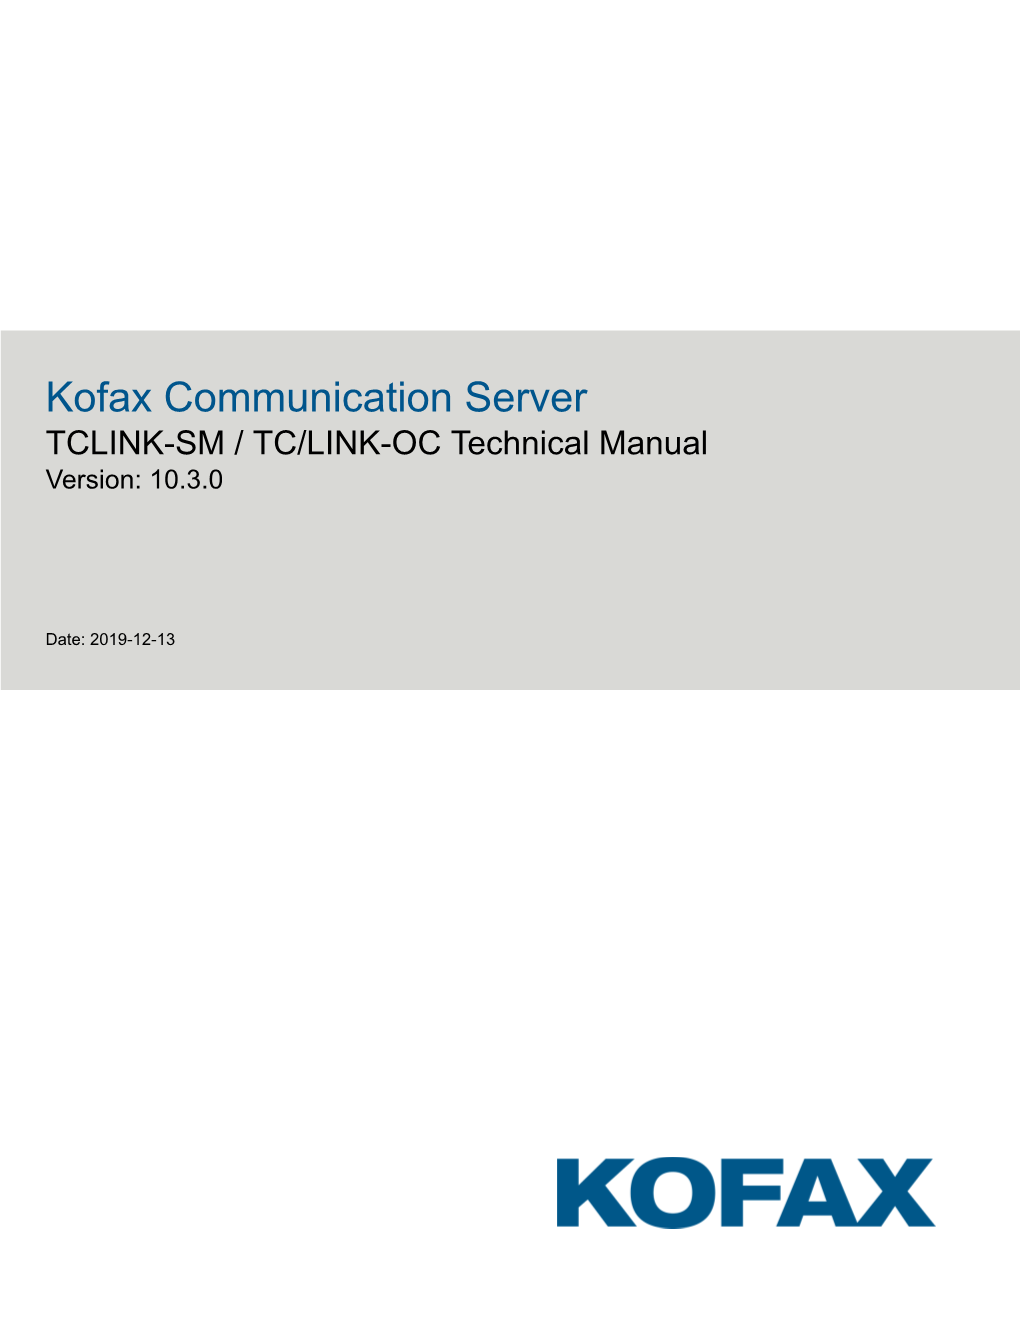 Kofax Communication Server TCLINK-SM / TC/LINK-OC Technical Manual Version: 10.3.0